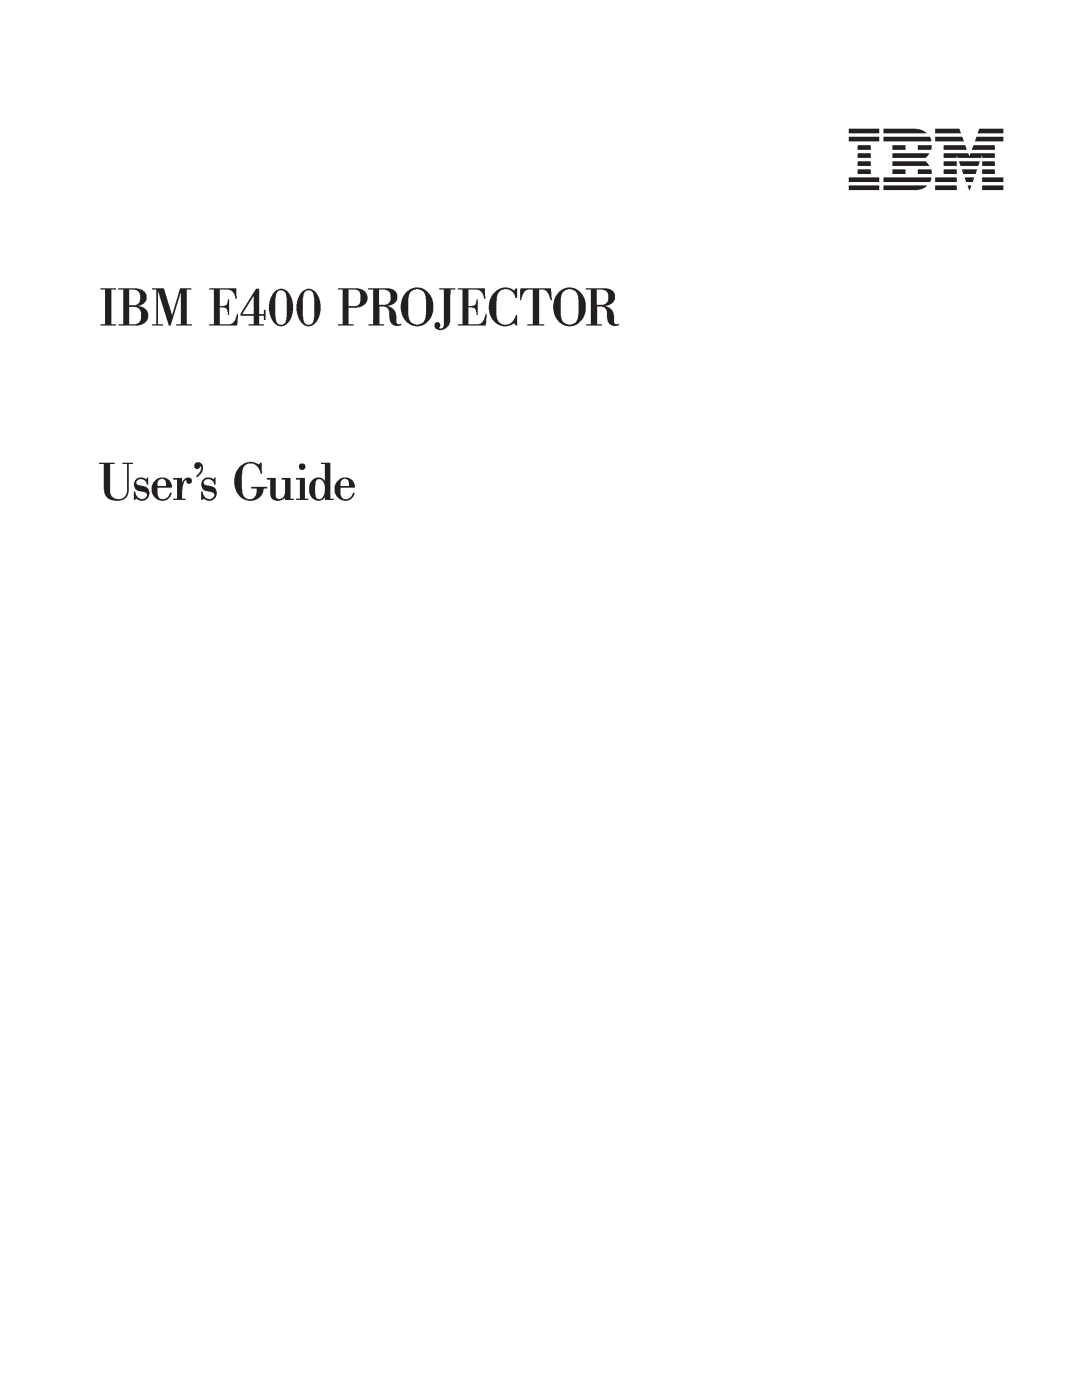 IBM Partner Pavilion PROJECTOR E400 manual IBM E400 PROJECTOR User’s Guide 